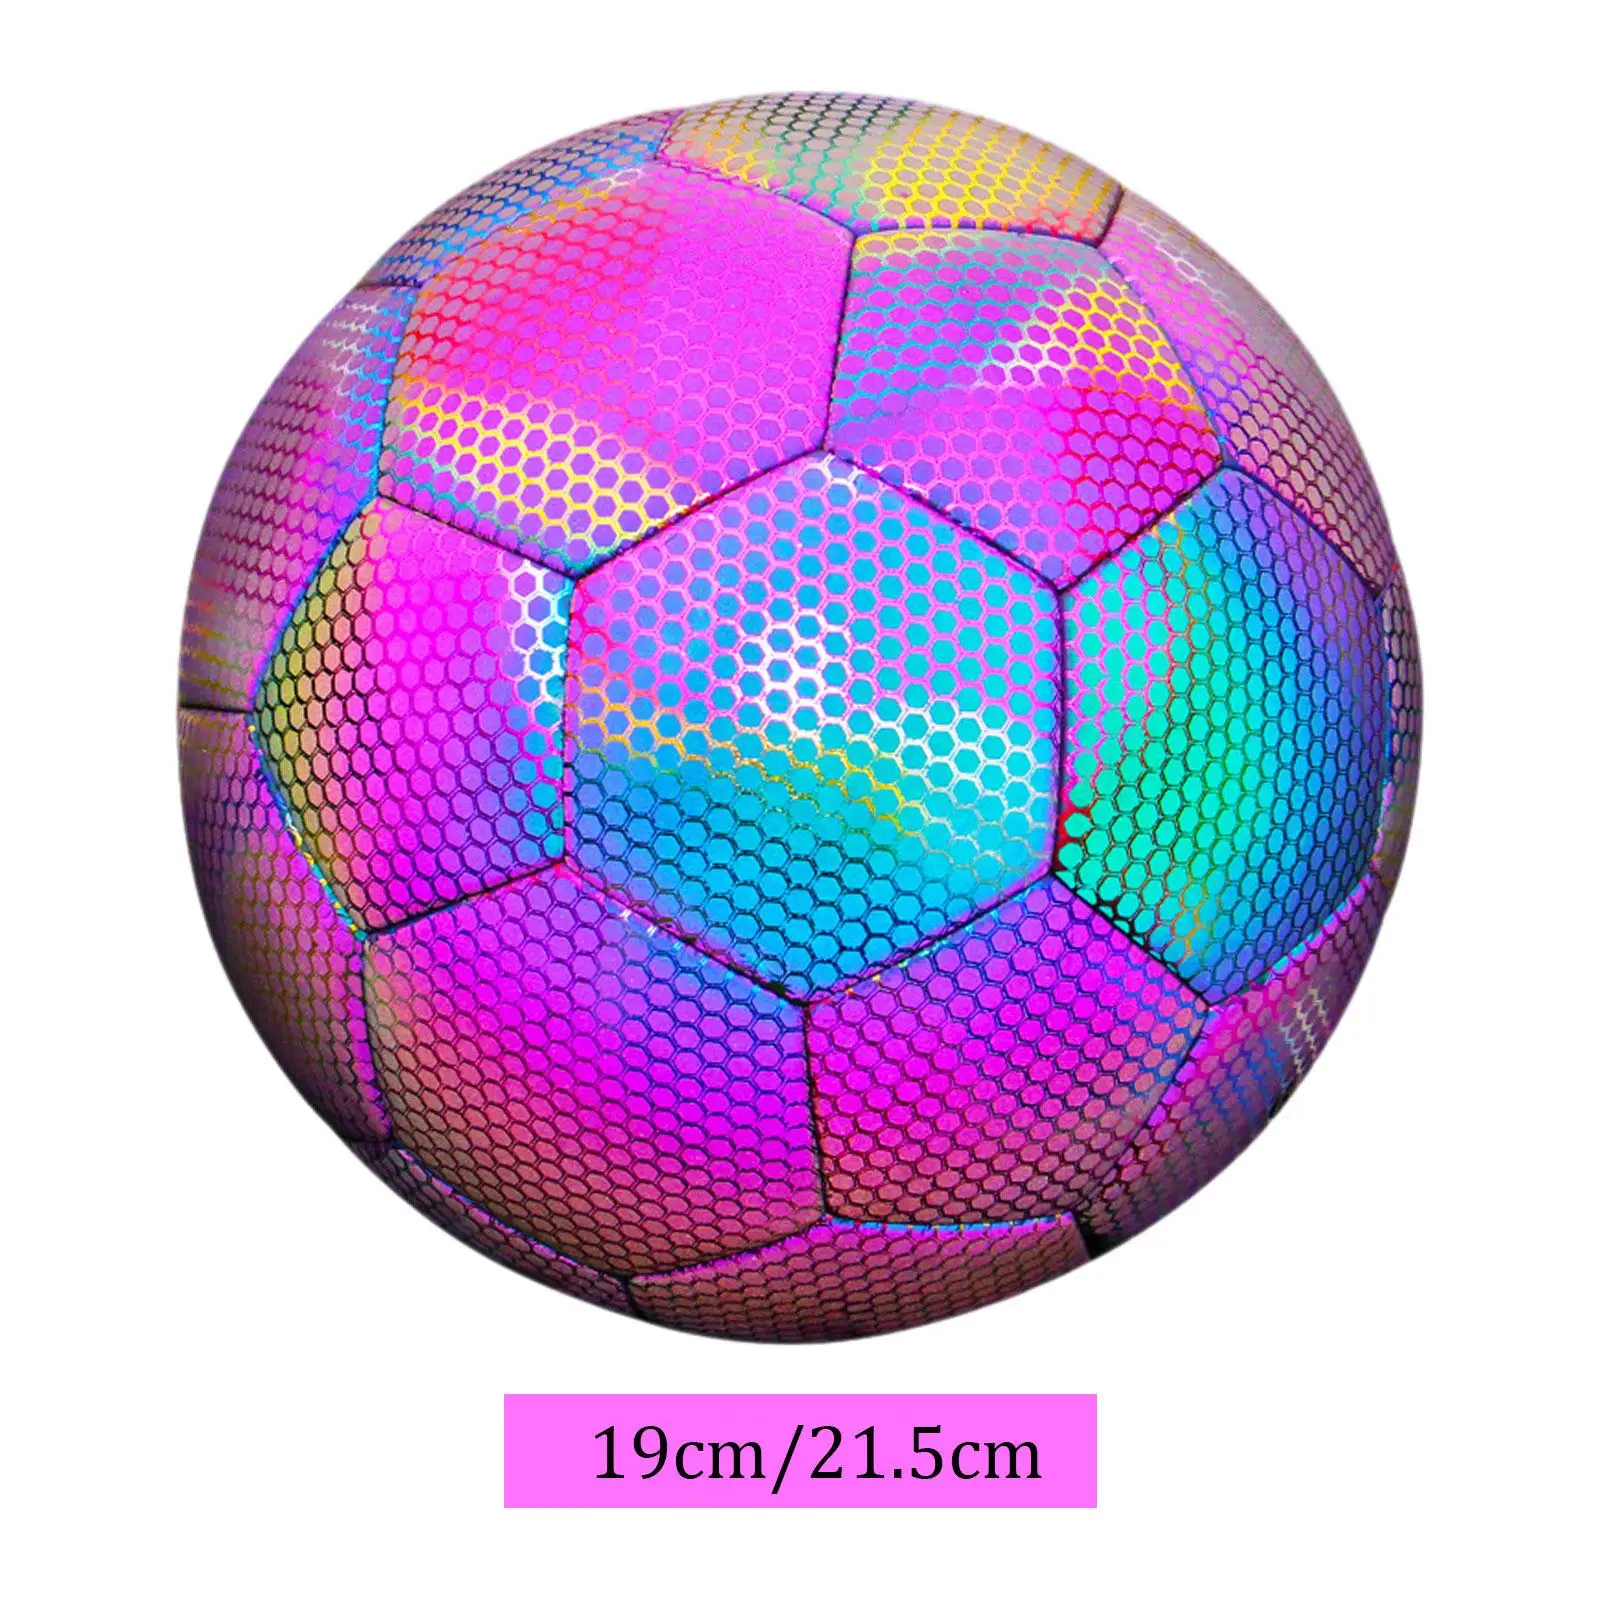 

Soccer Ball Reflective Holographic Luminous Football PU Football Training Ball for Kids Adults Players Girls Boys Official Match